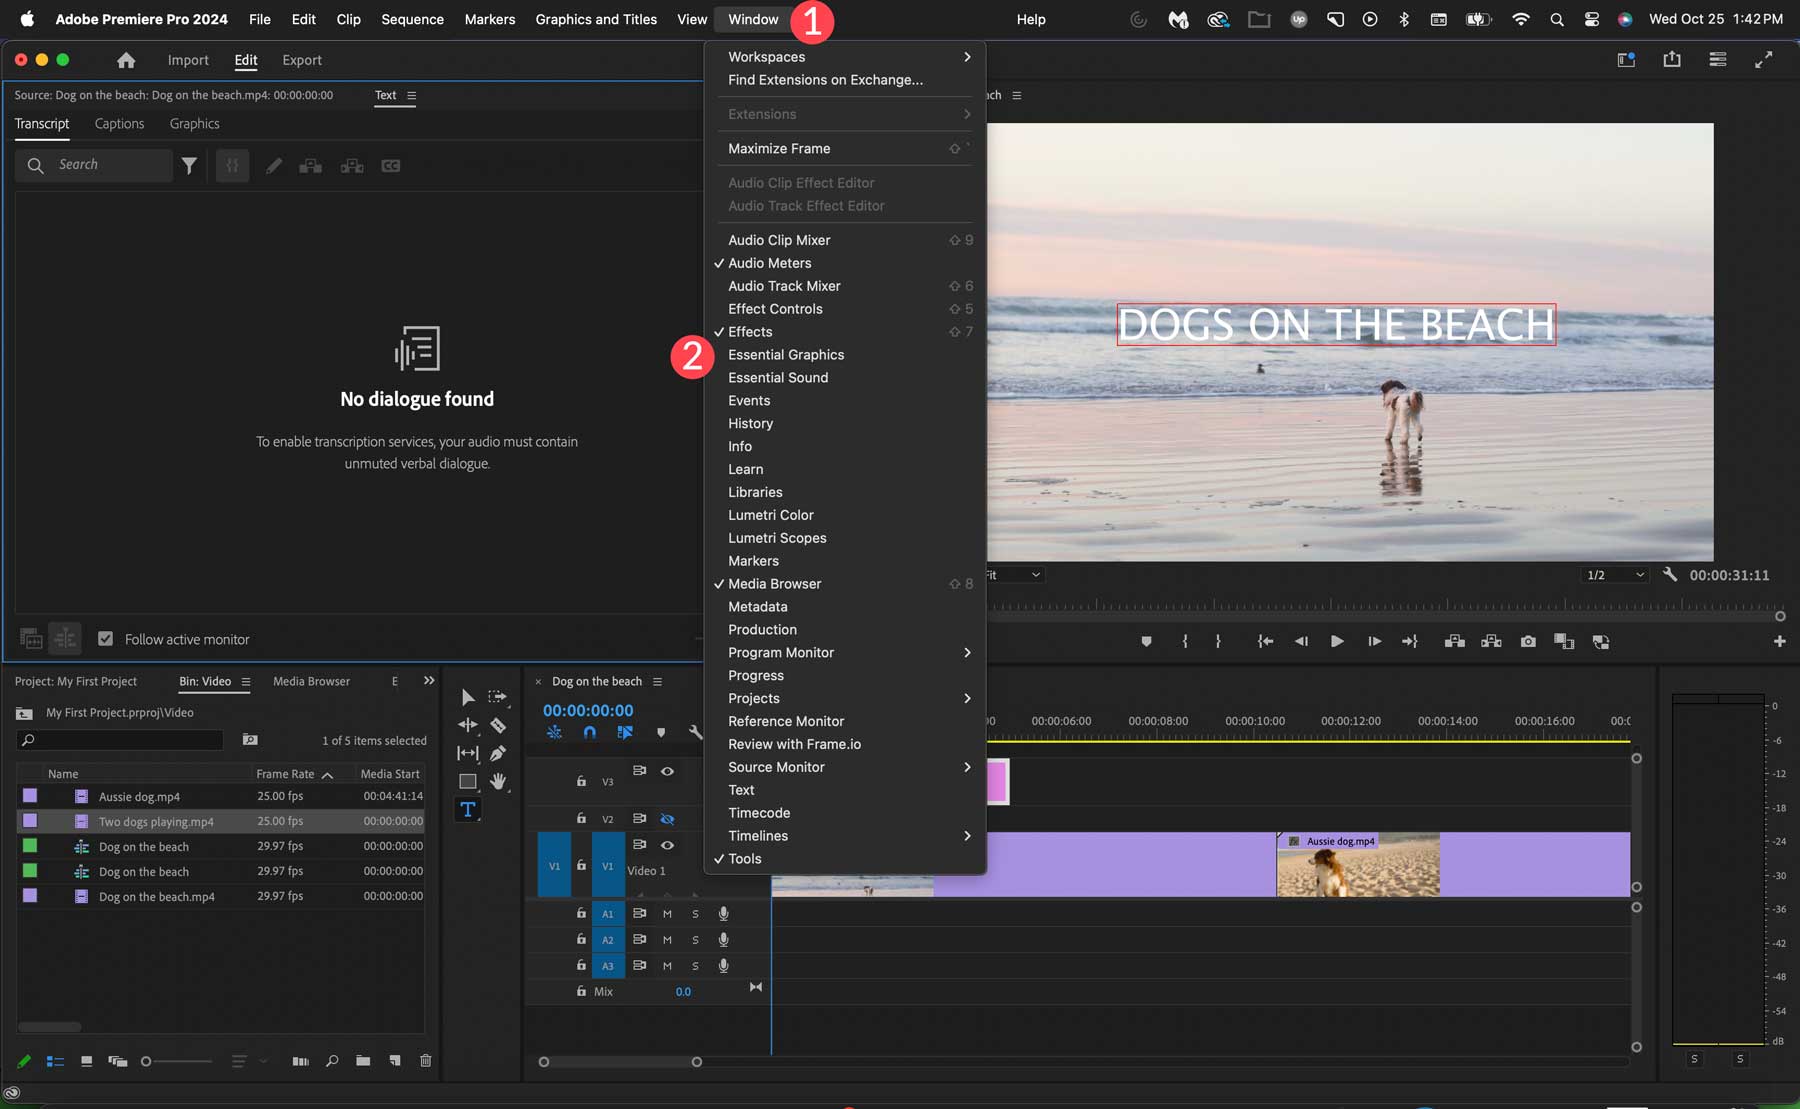 Adobe Premiere Pro graphics panel